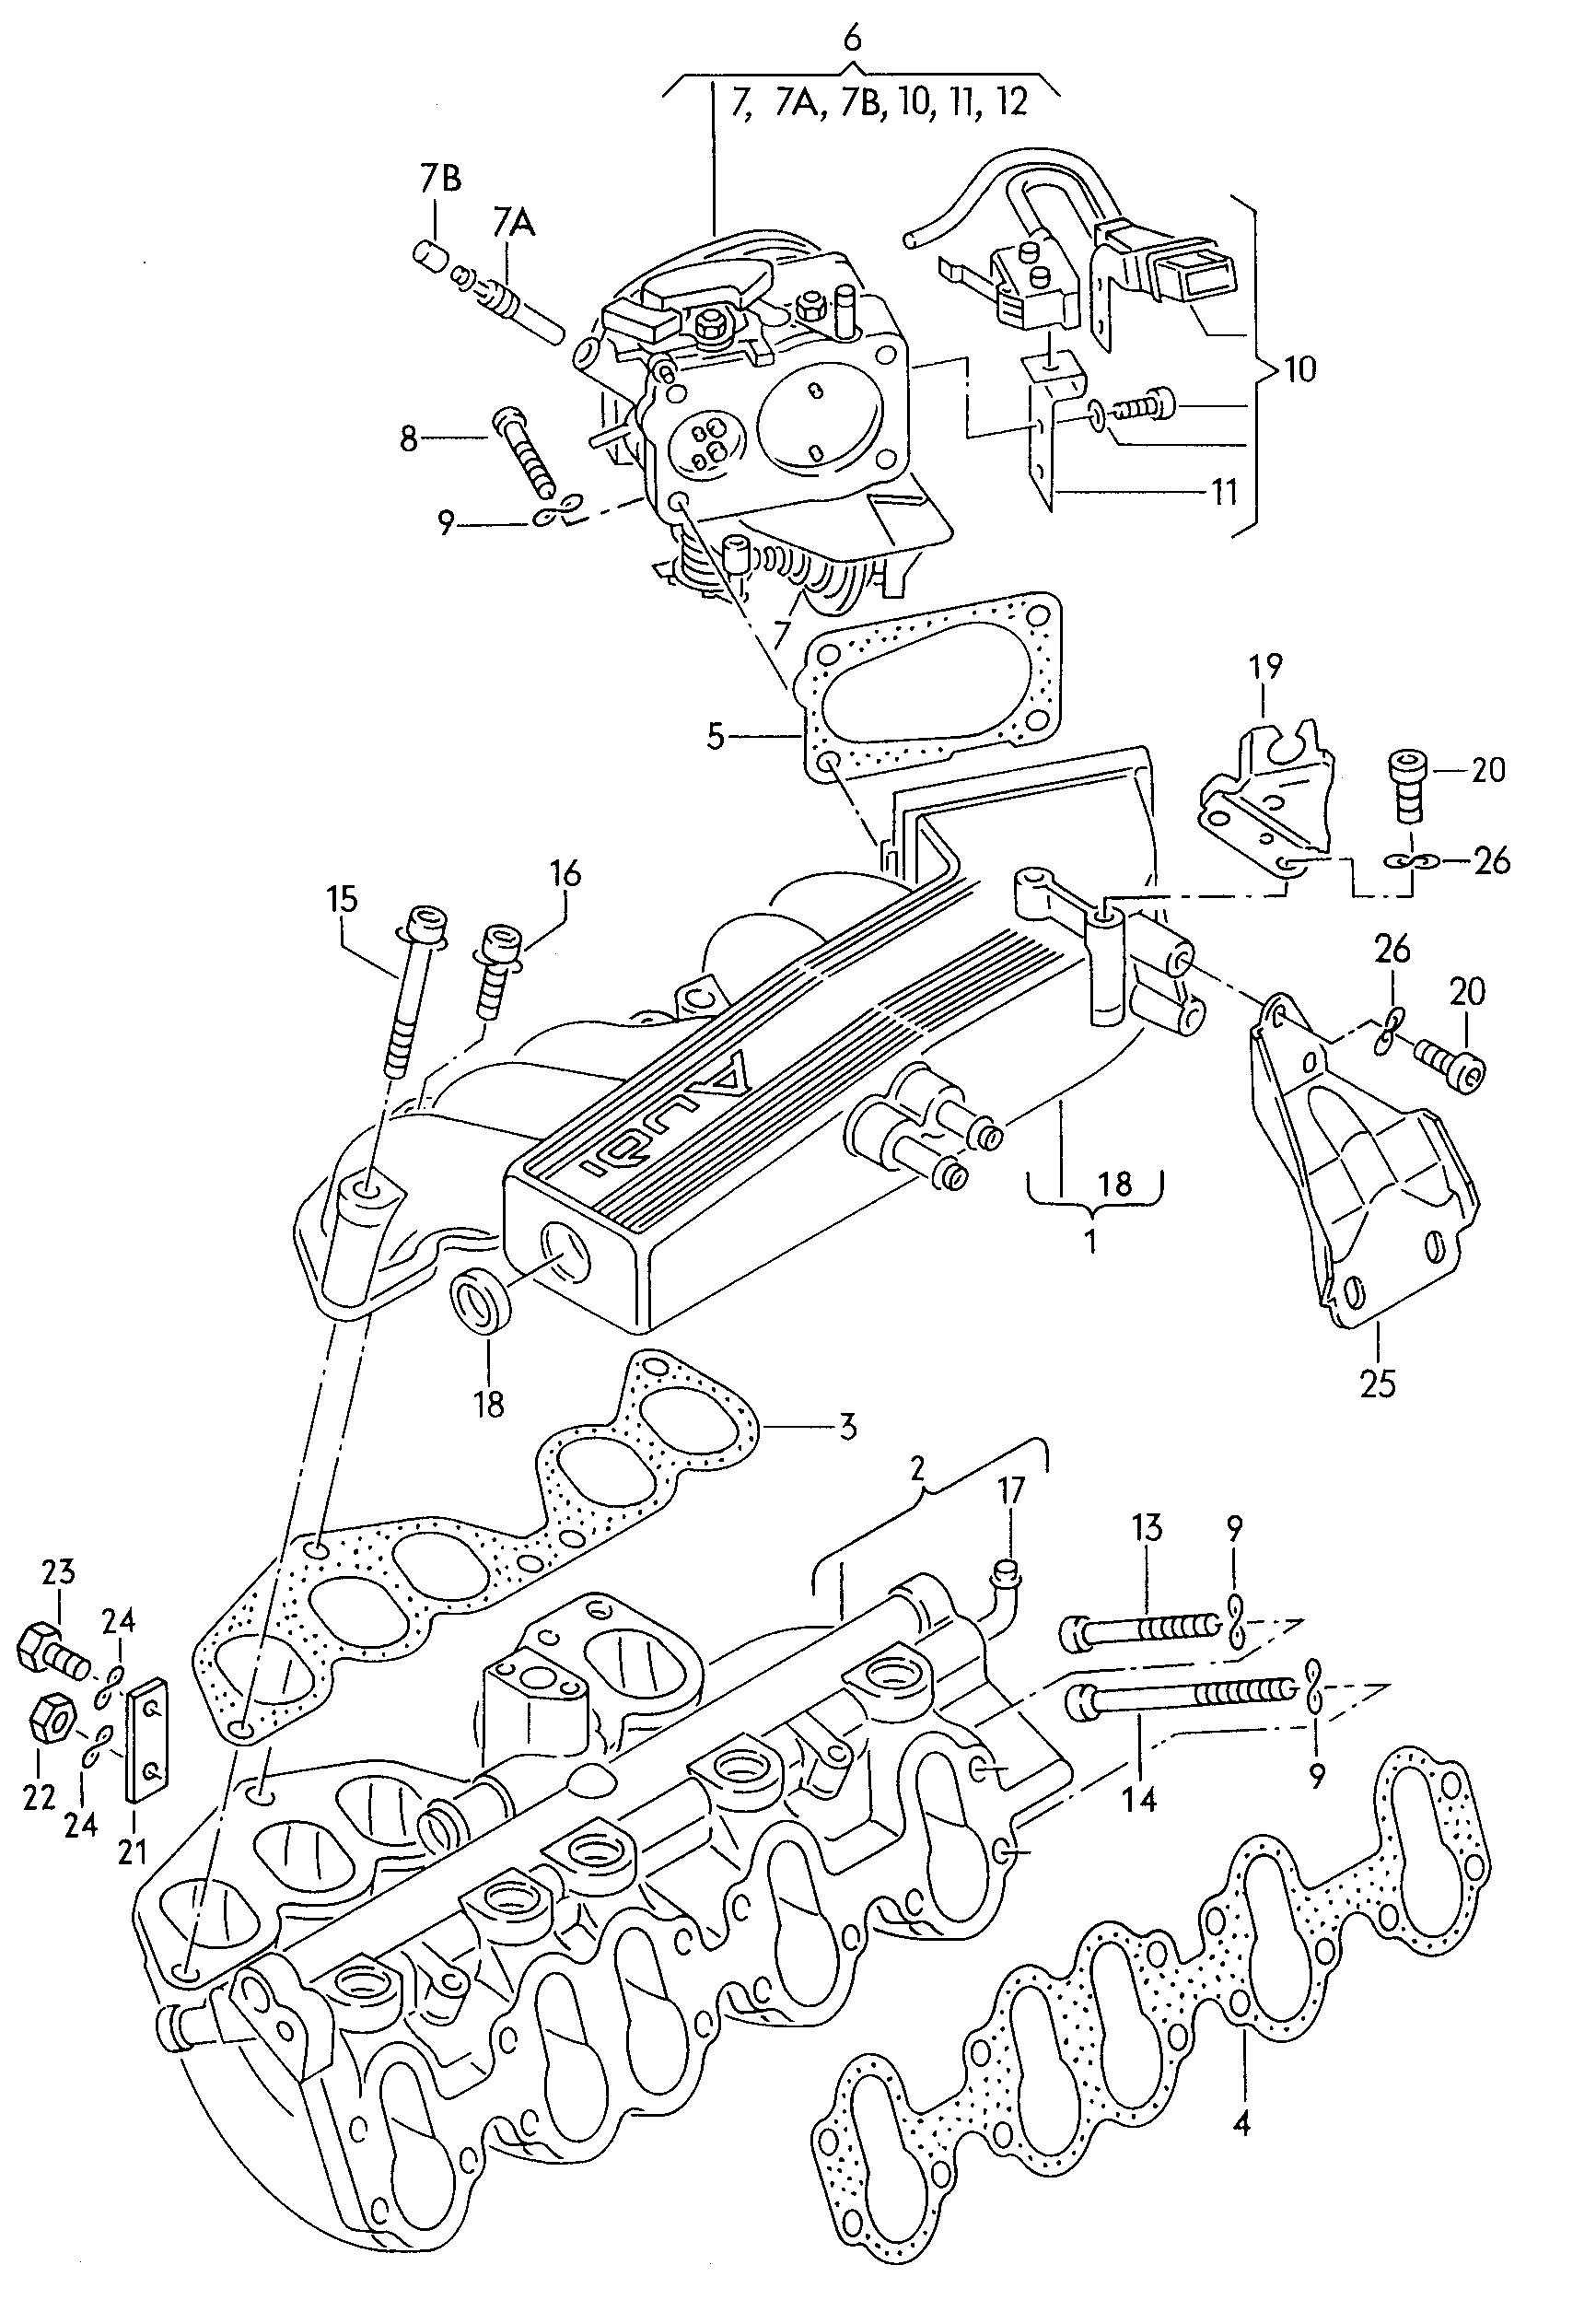 throttle valve adapterIntake connection  - Audi Coupe quattro - acoq